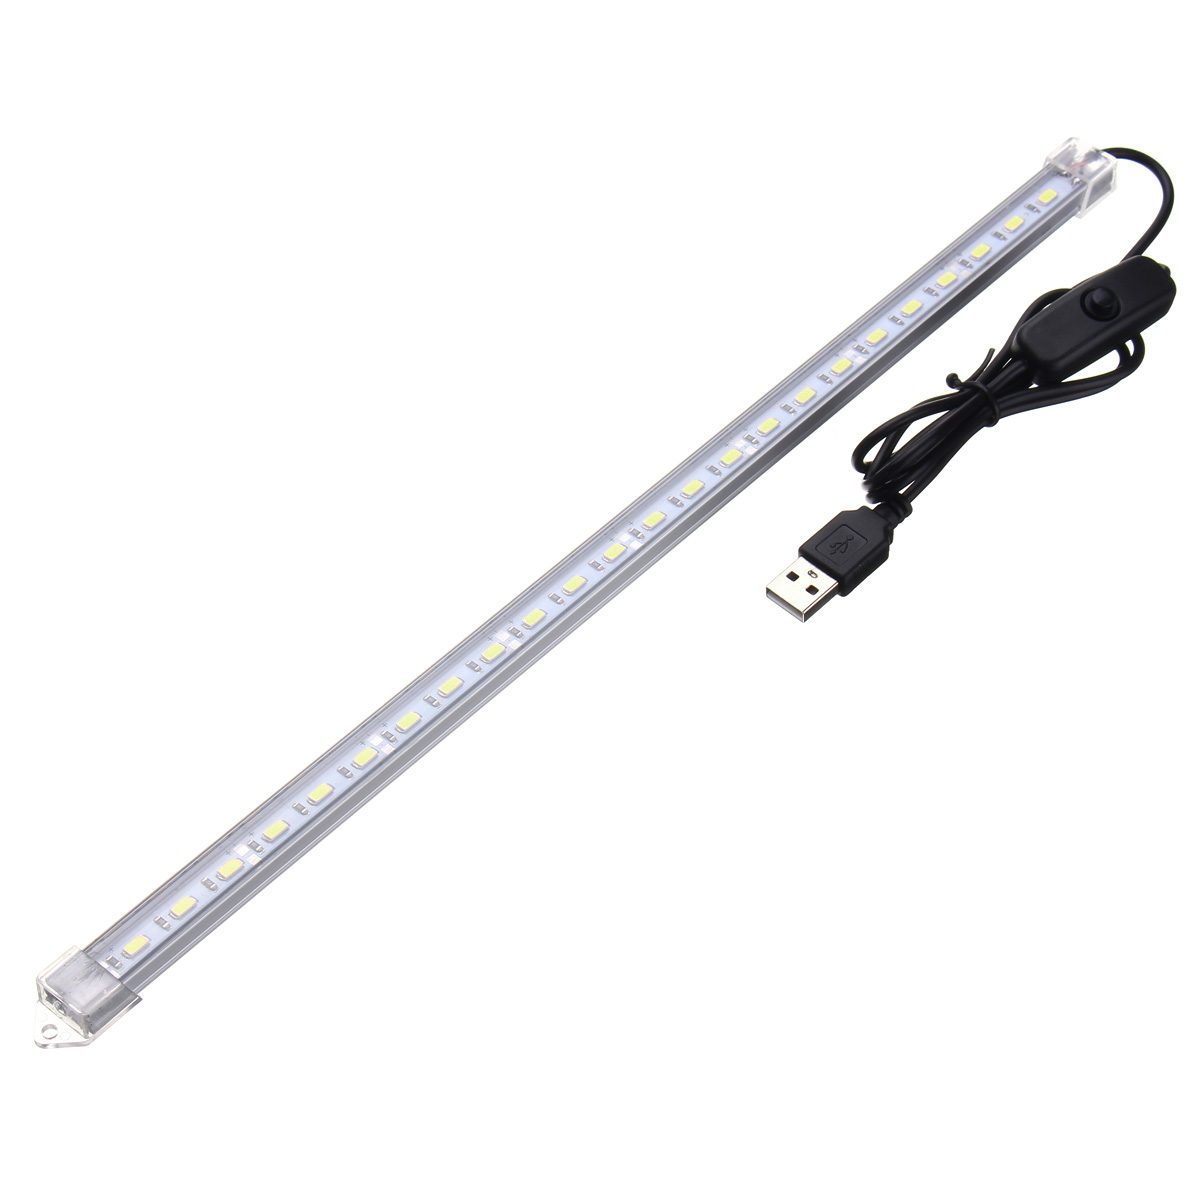 USB 50CM 4W 36 SMD  5630 LED Rigid Strip Hard Bar Light Tube Lamp DC5V NEW 